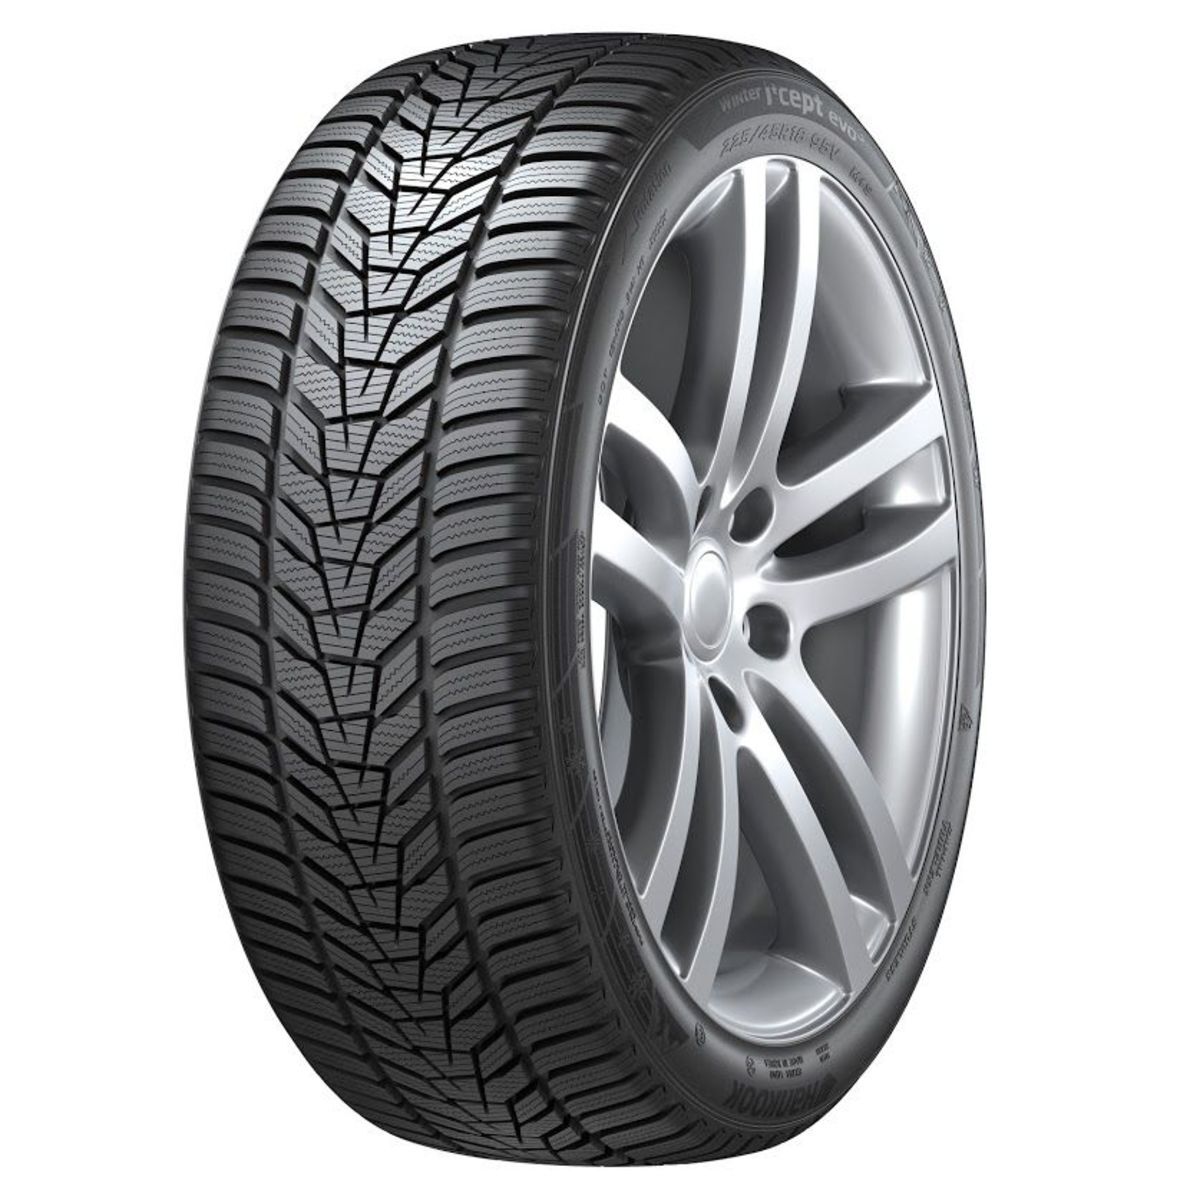 Neumáticos de invierno HANKOOK Winter i*cept evo3 W330 215/50R18 92V